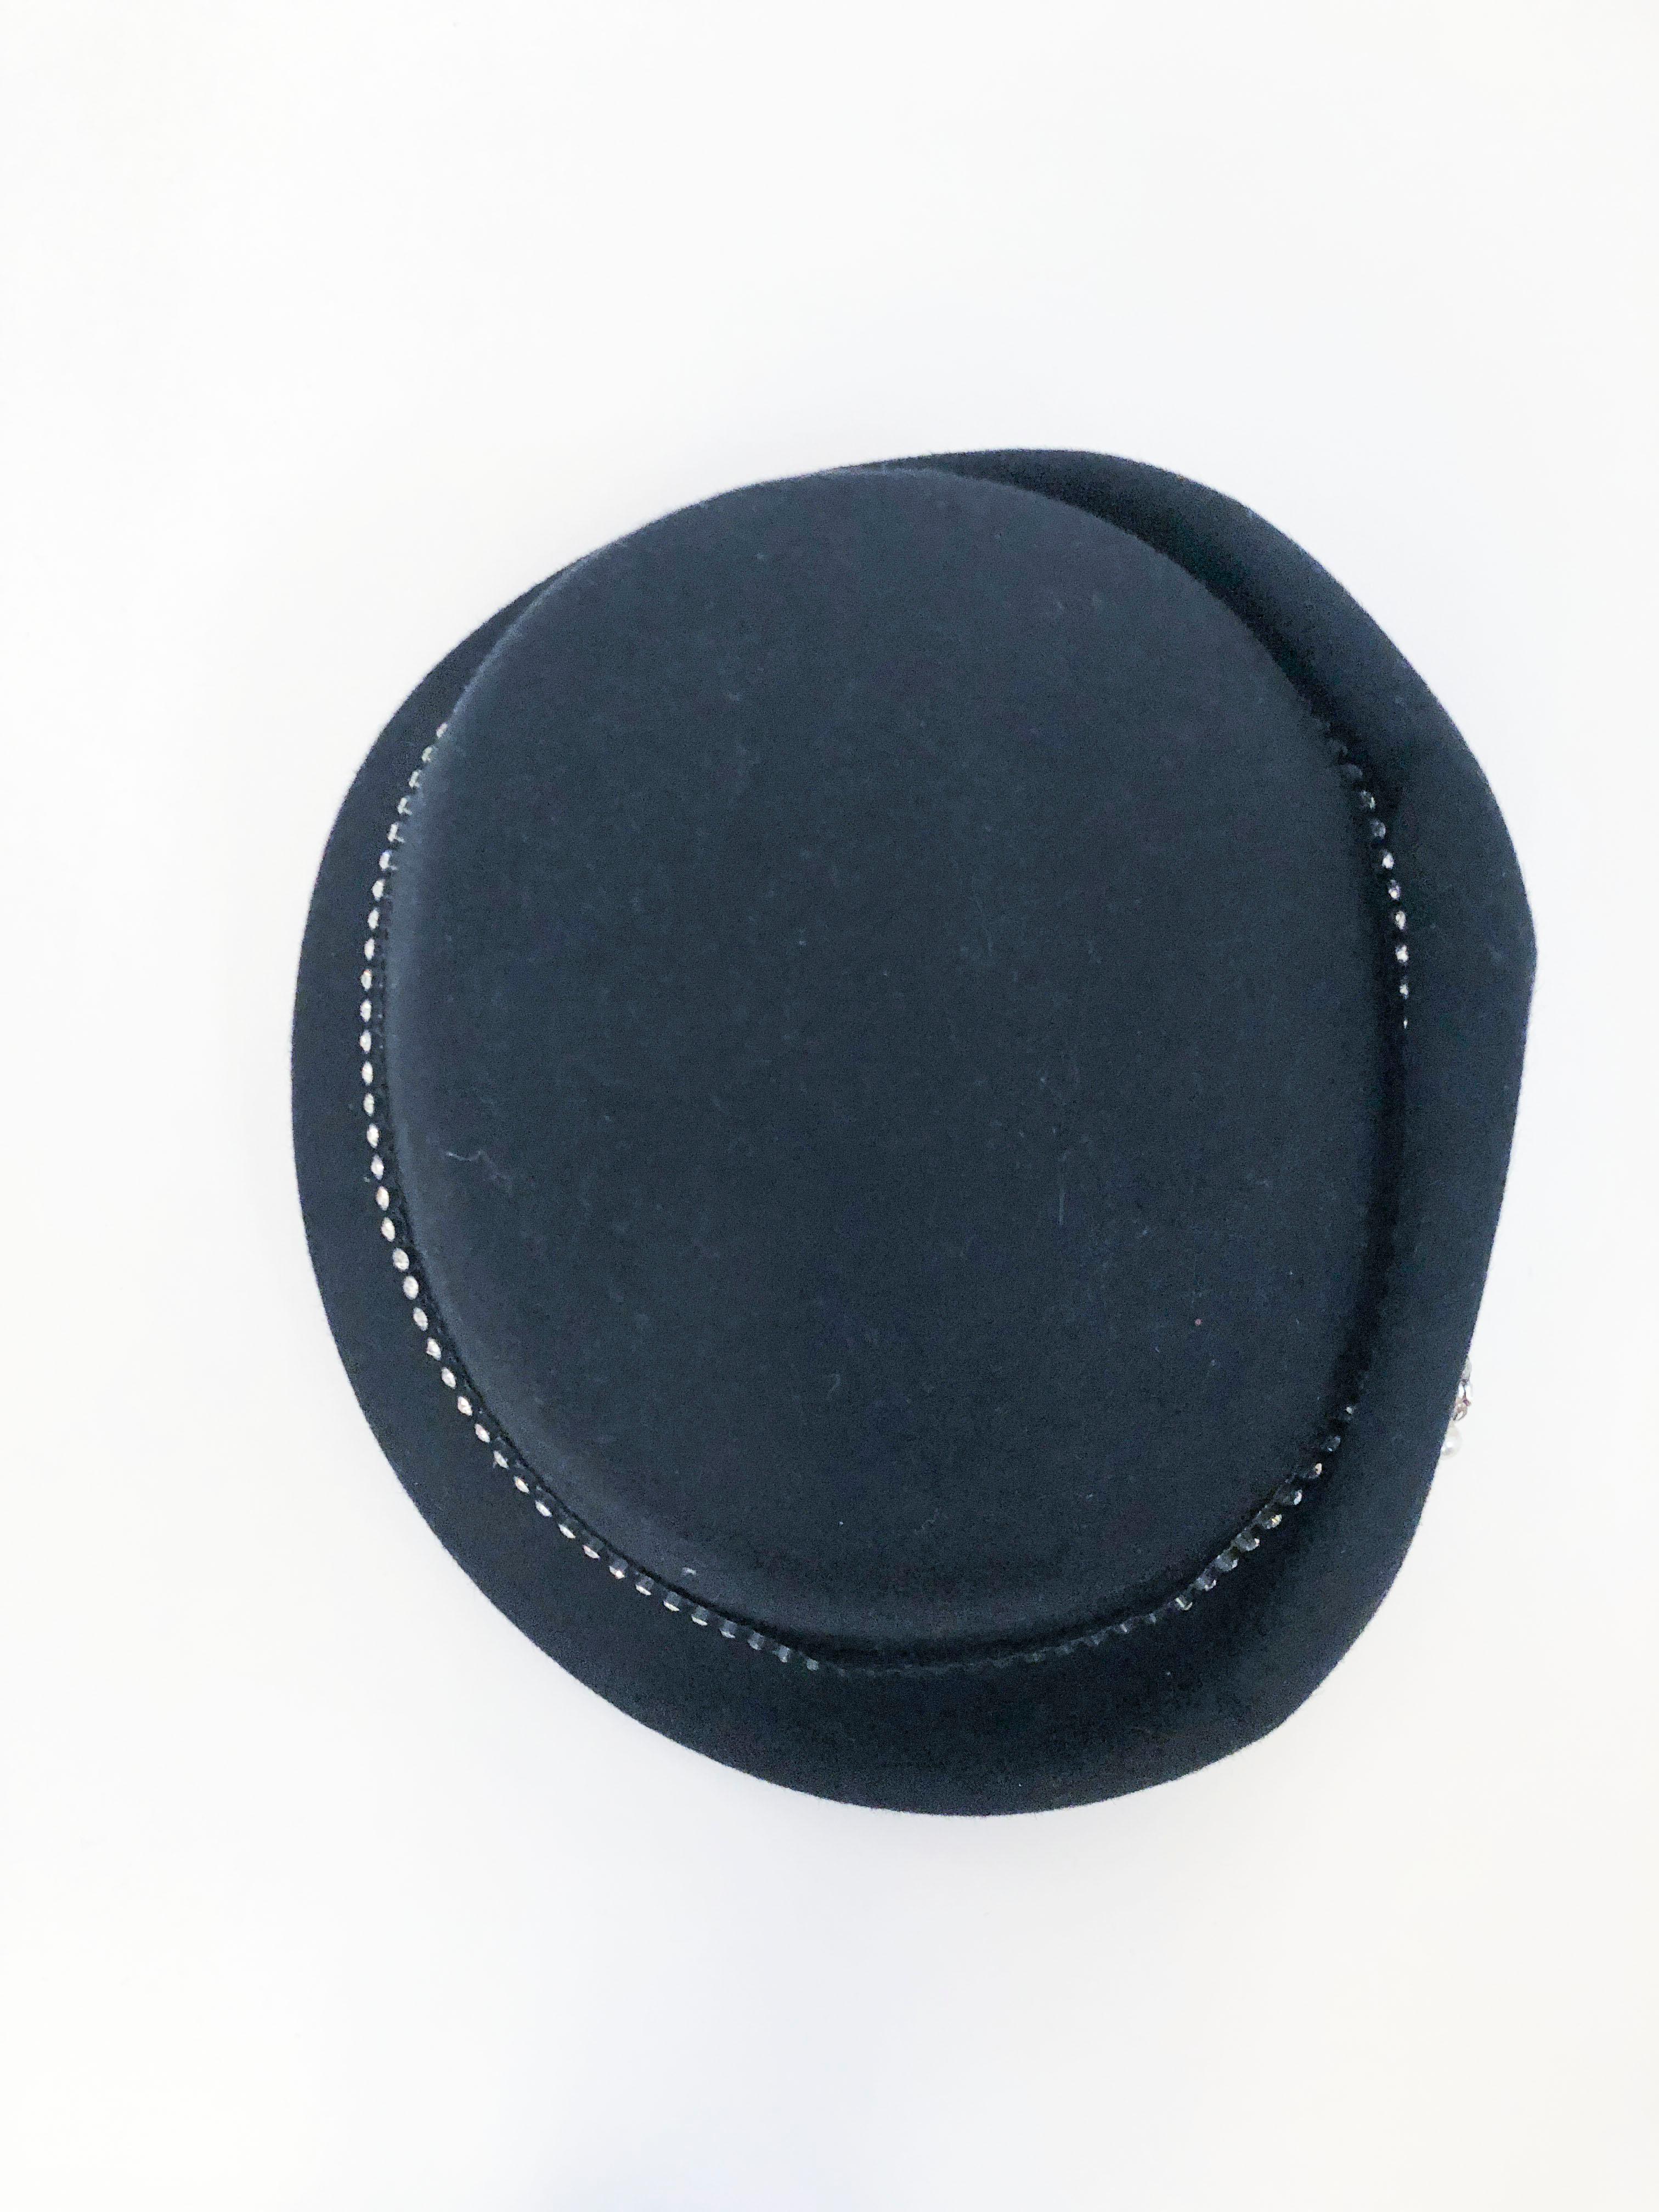 1960s/1970s Black Fur Felt Hat with Rhinestone Accents 2